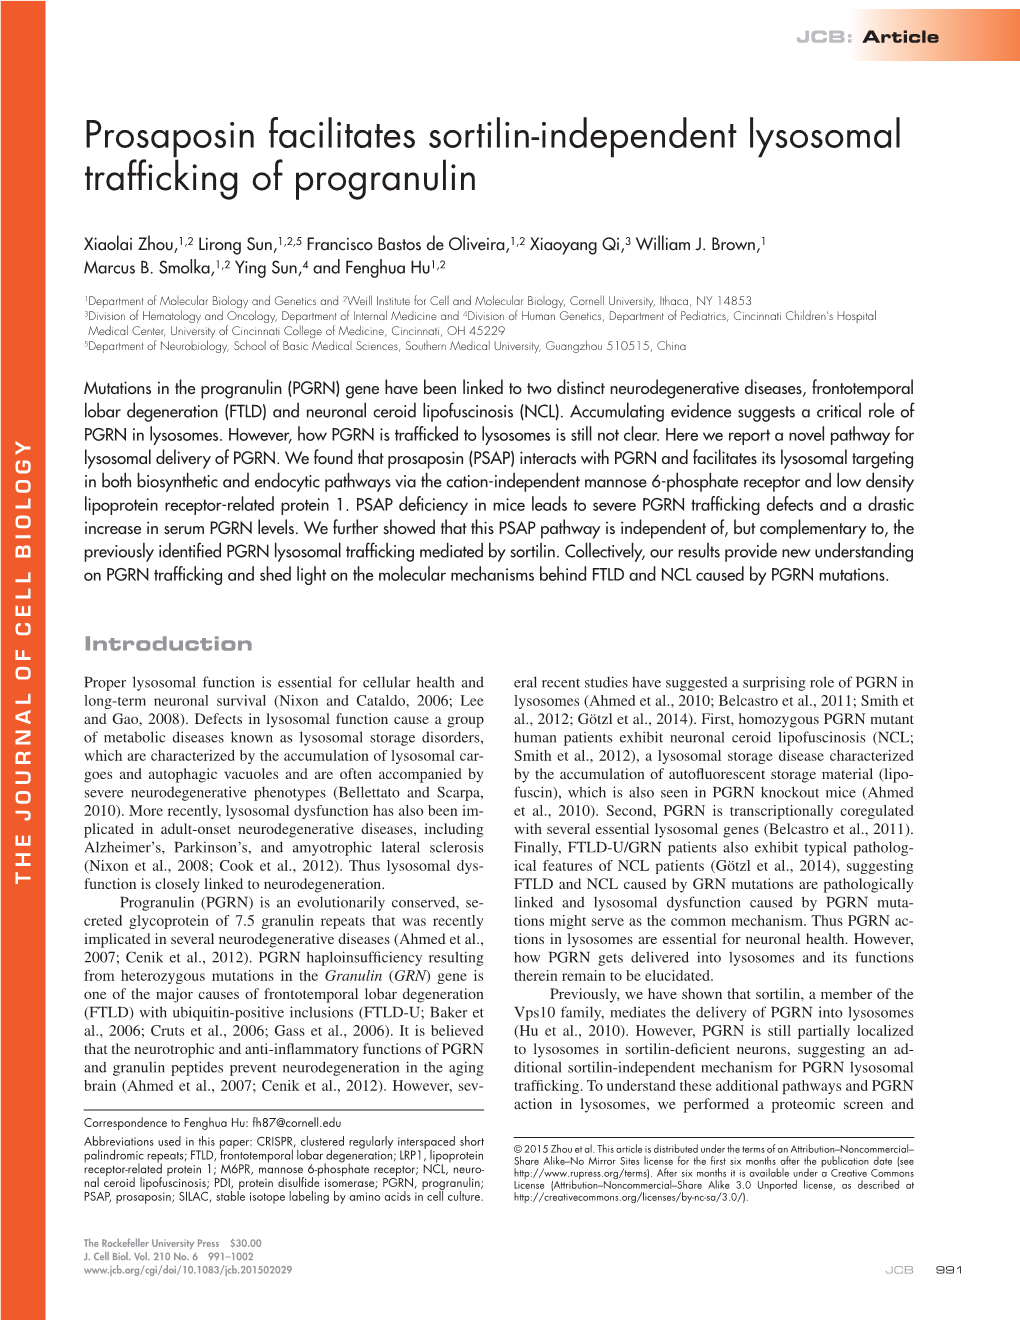 Prosaposin Facilitates Sortilin-Independent Lysosomal Trafficking of Progranulin